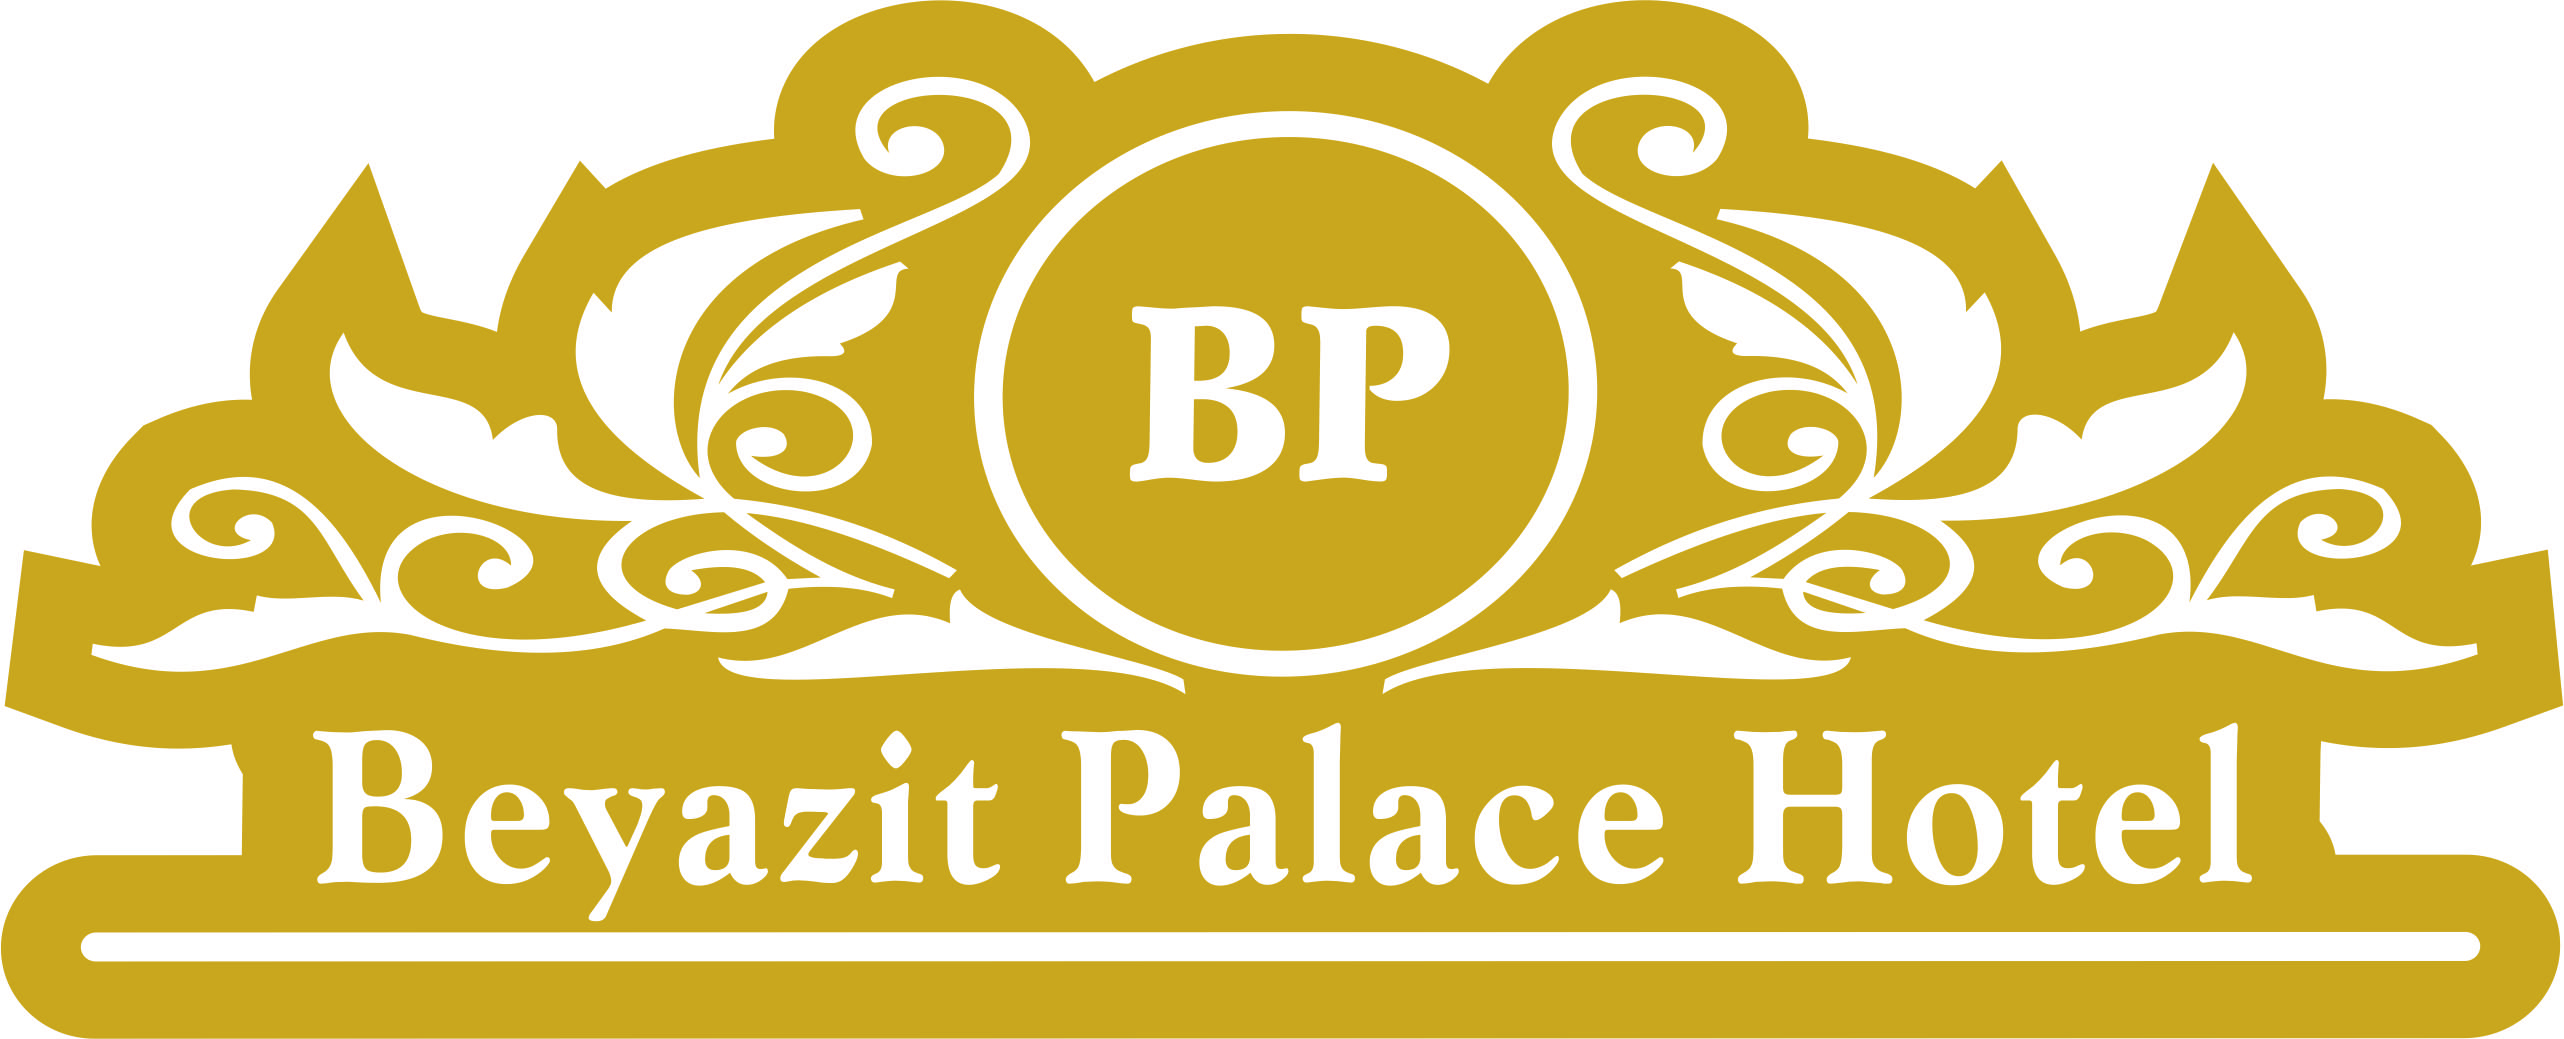 Beyazit Palace Hotel 